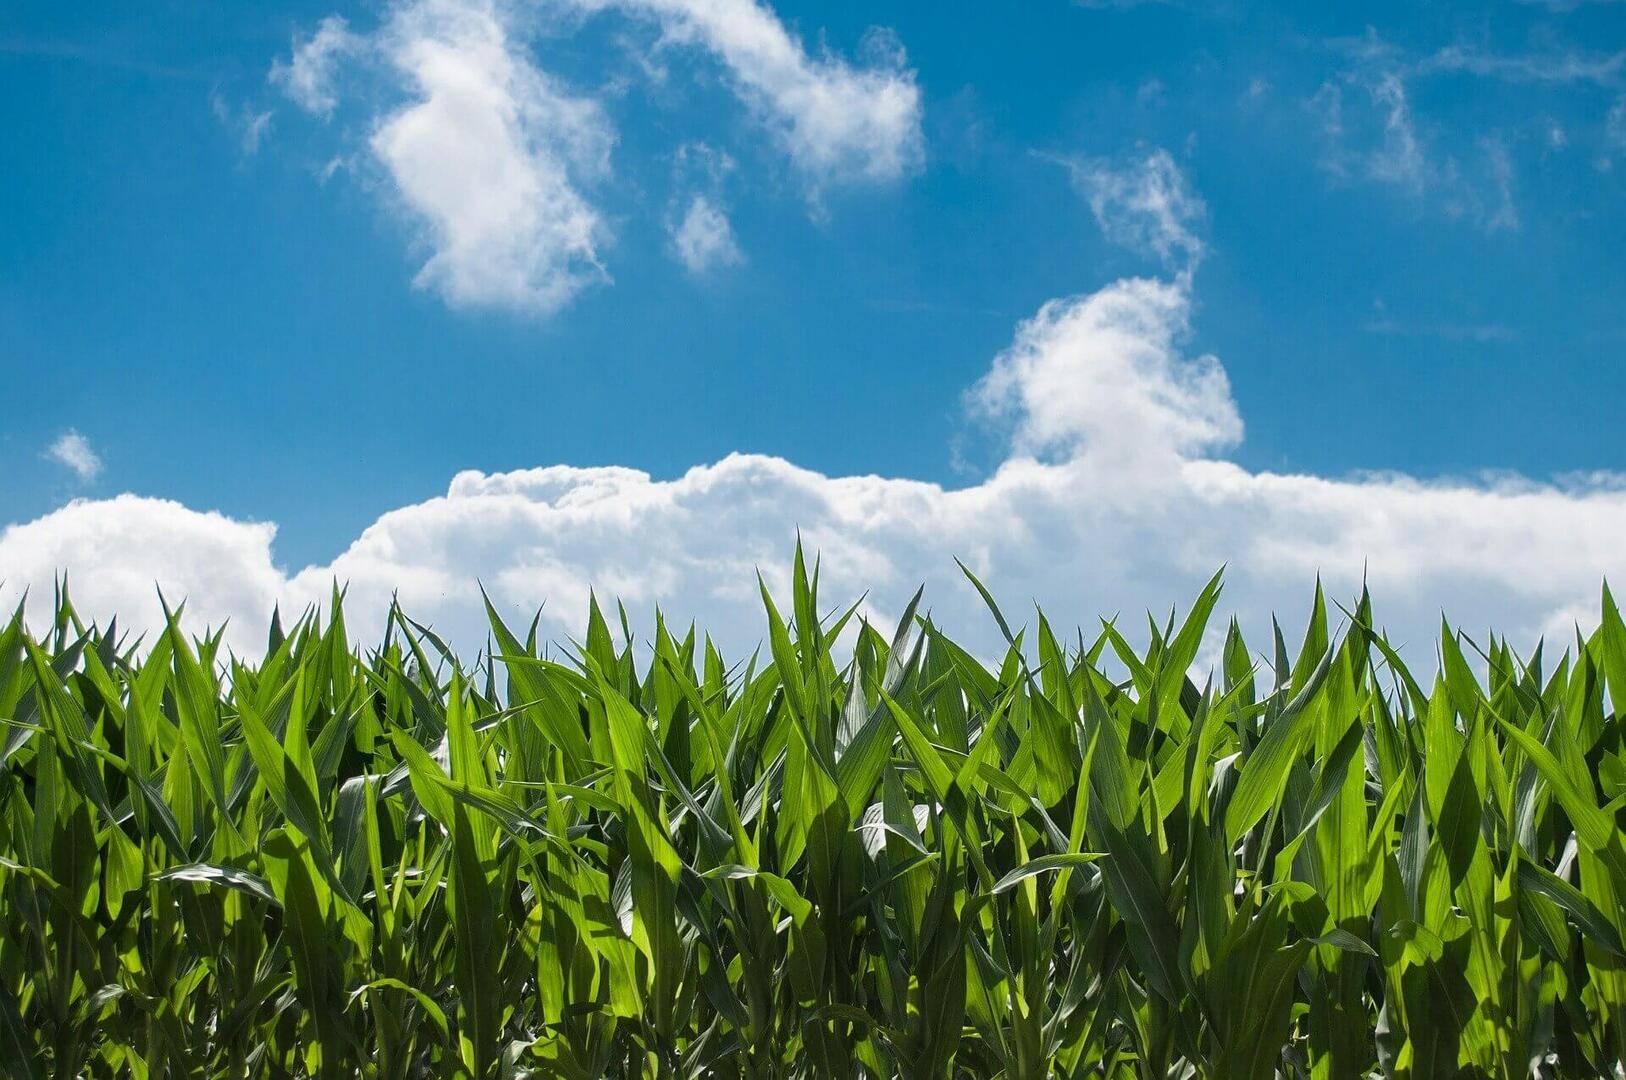 Photo of corn husks in a field.